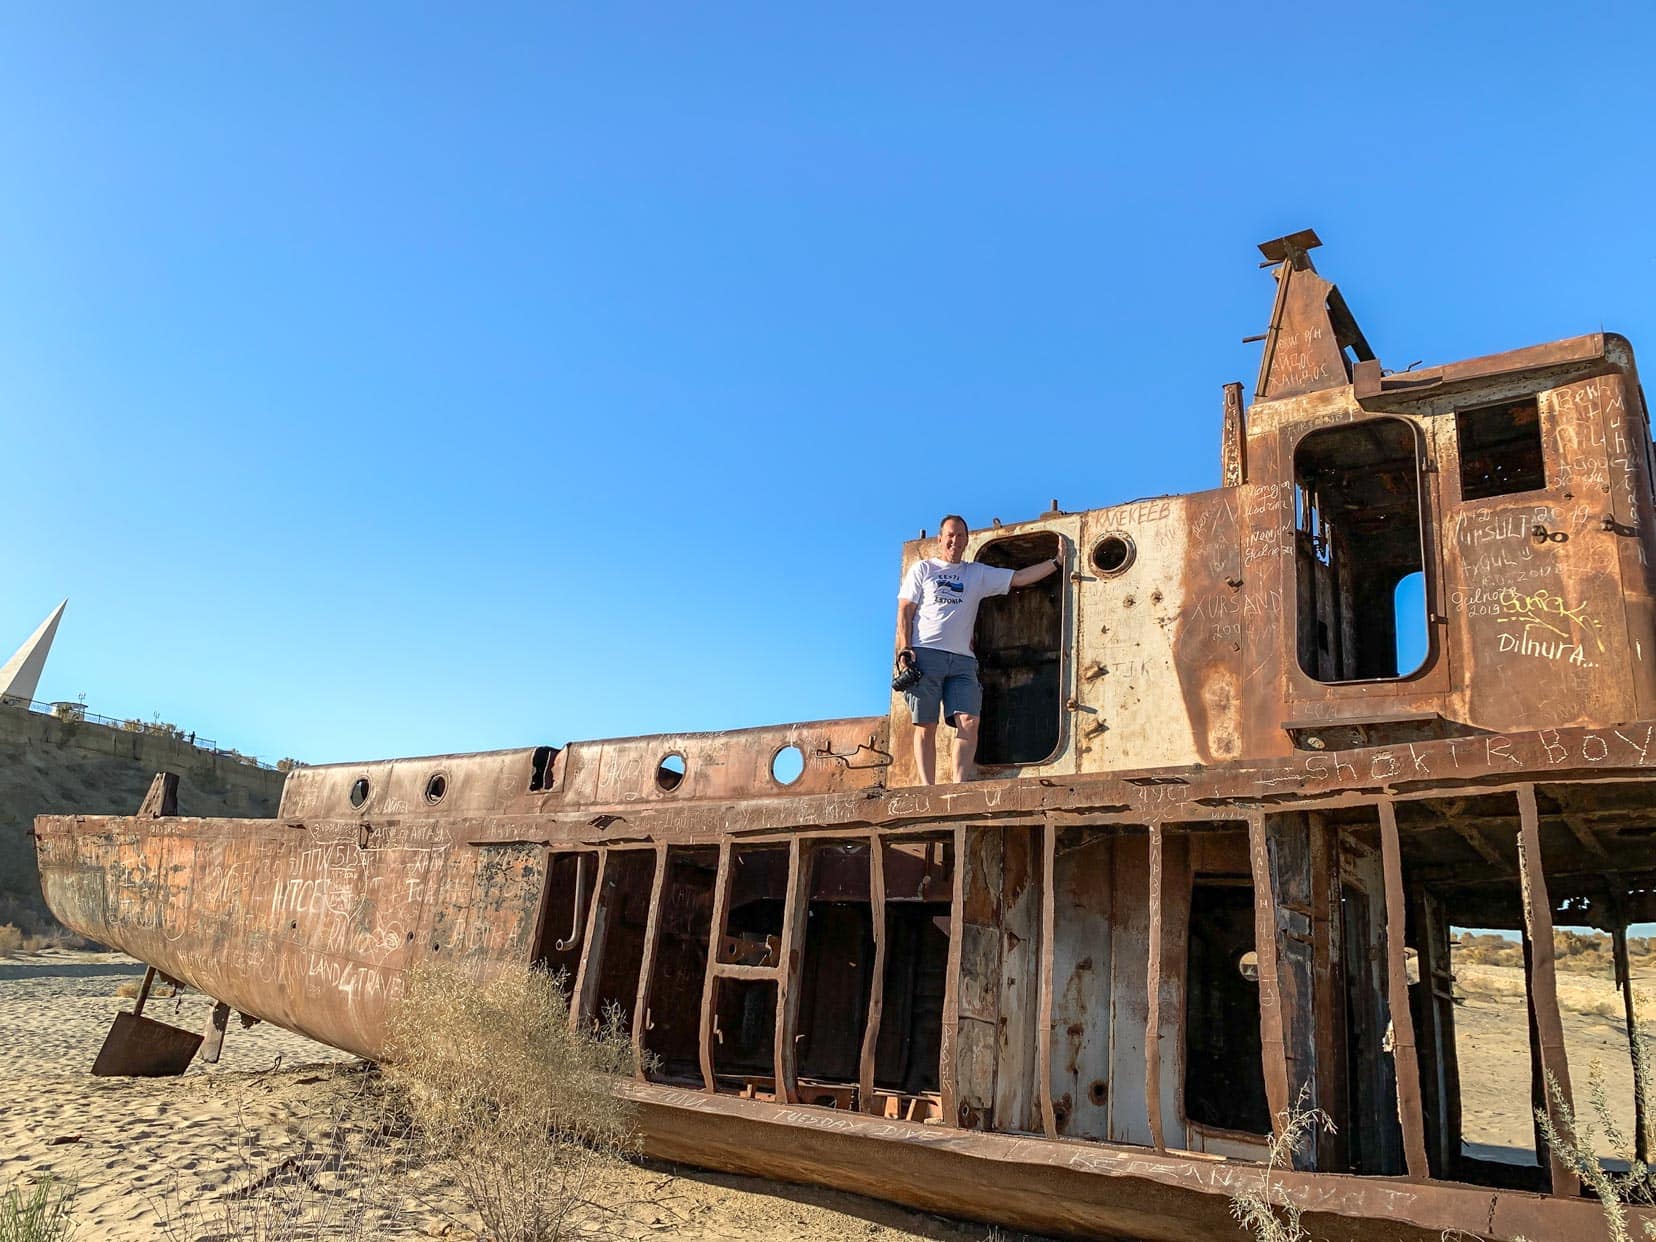 Me-at-Aral-Sea-ship-graveyard,-Muynak